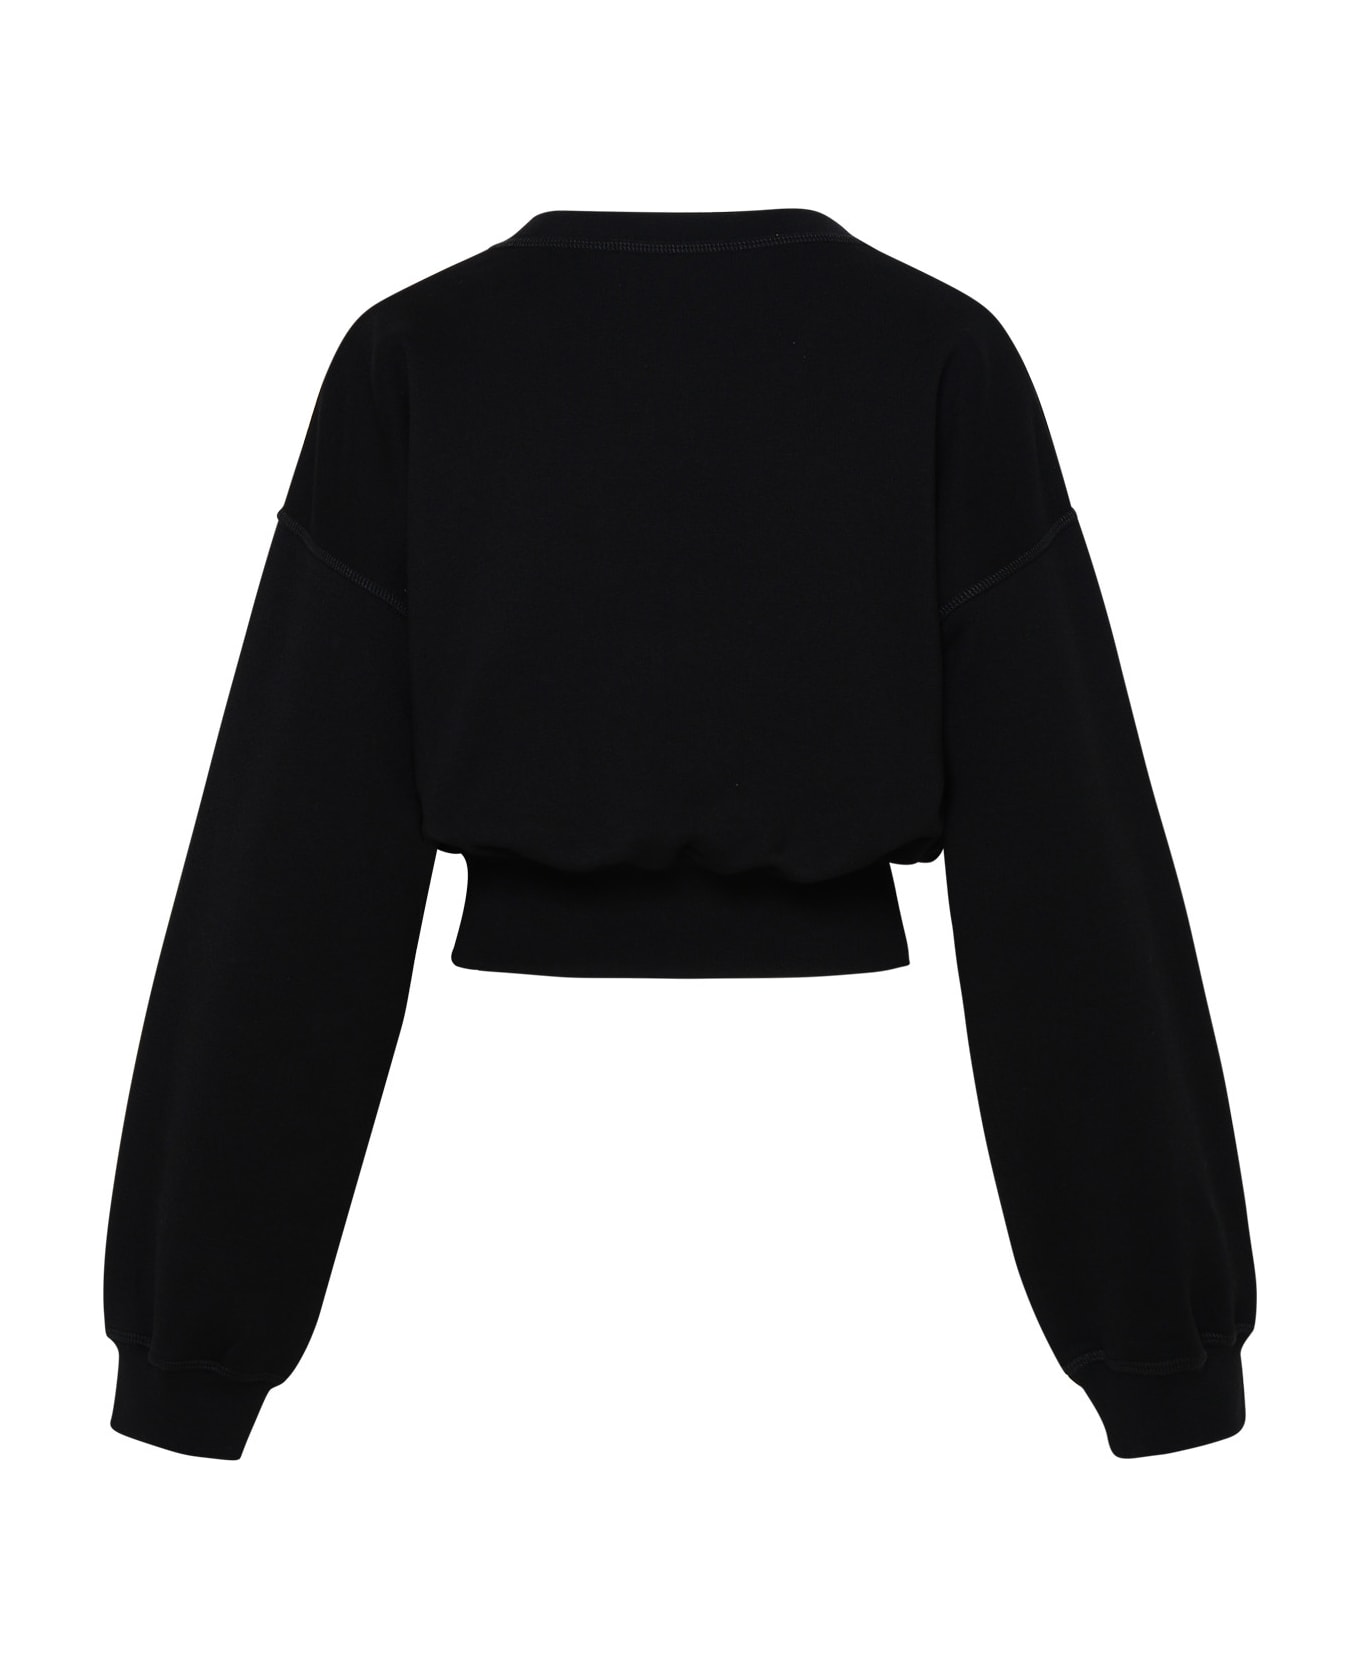 Dsquared2 Black Cotton Sweatshirt - Black